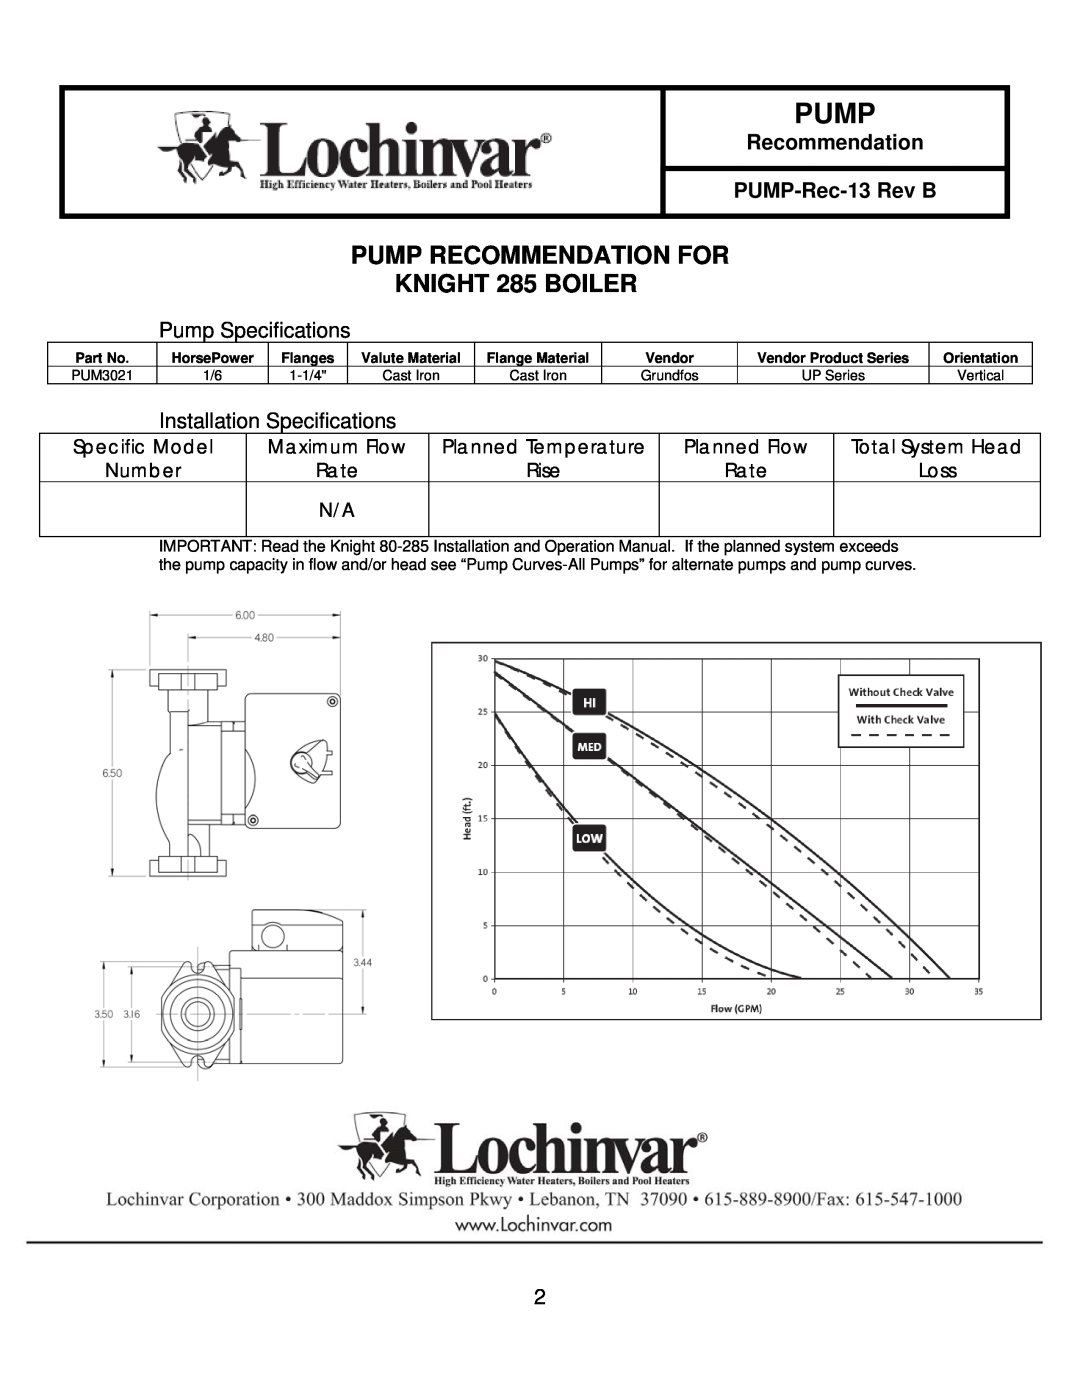 Lochinvar 080-210 KNIGHT 285 BOILER, Pump Recommendation For, Pump Specifications, Installation Specifications, Number 